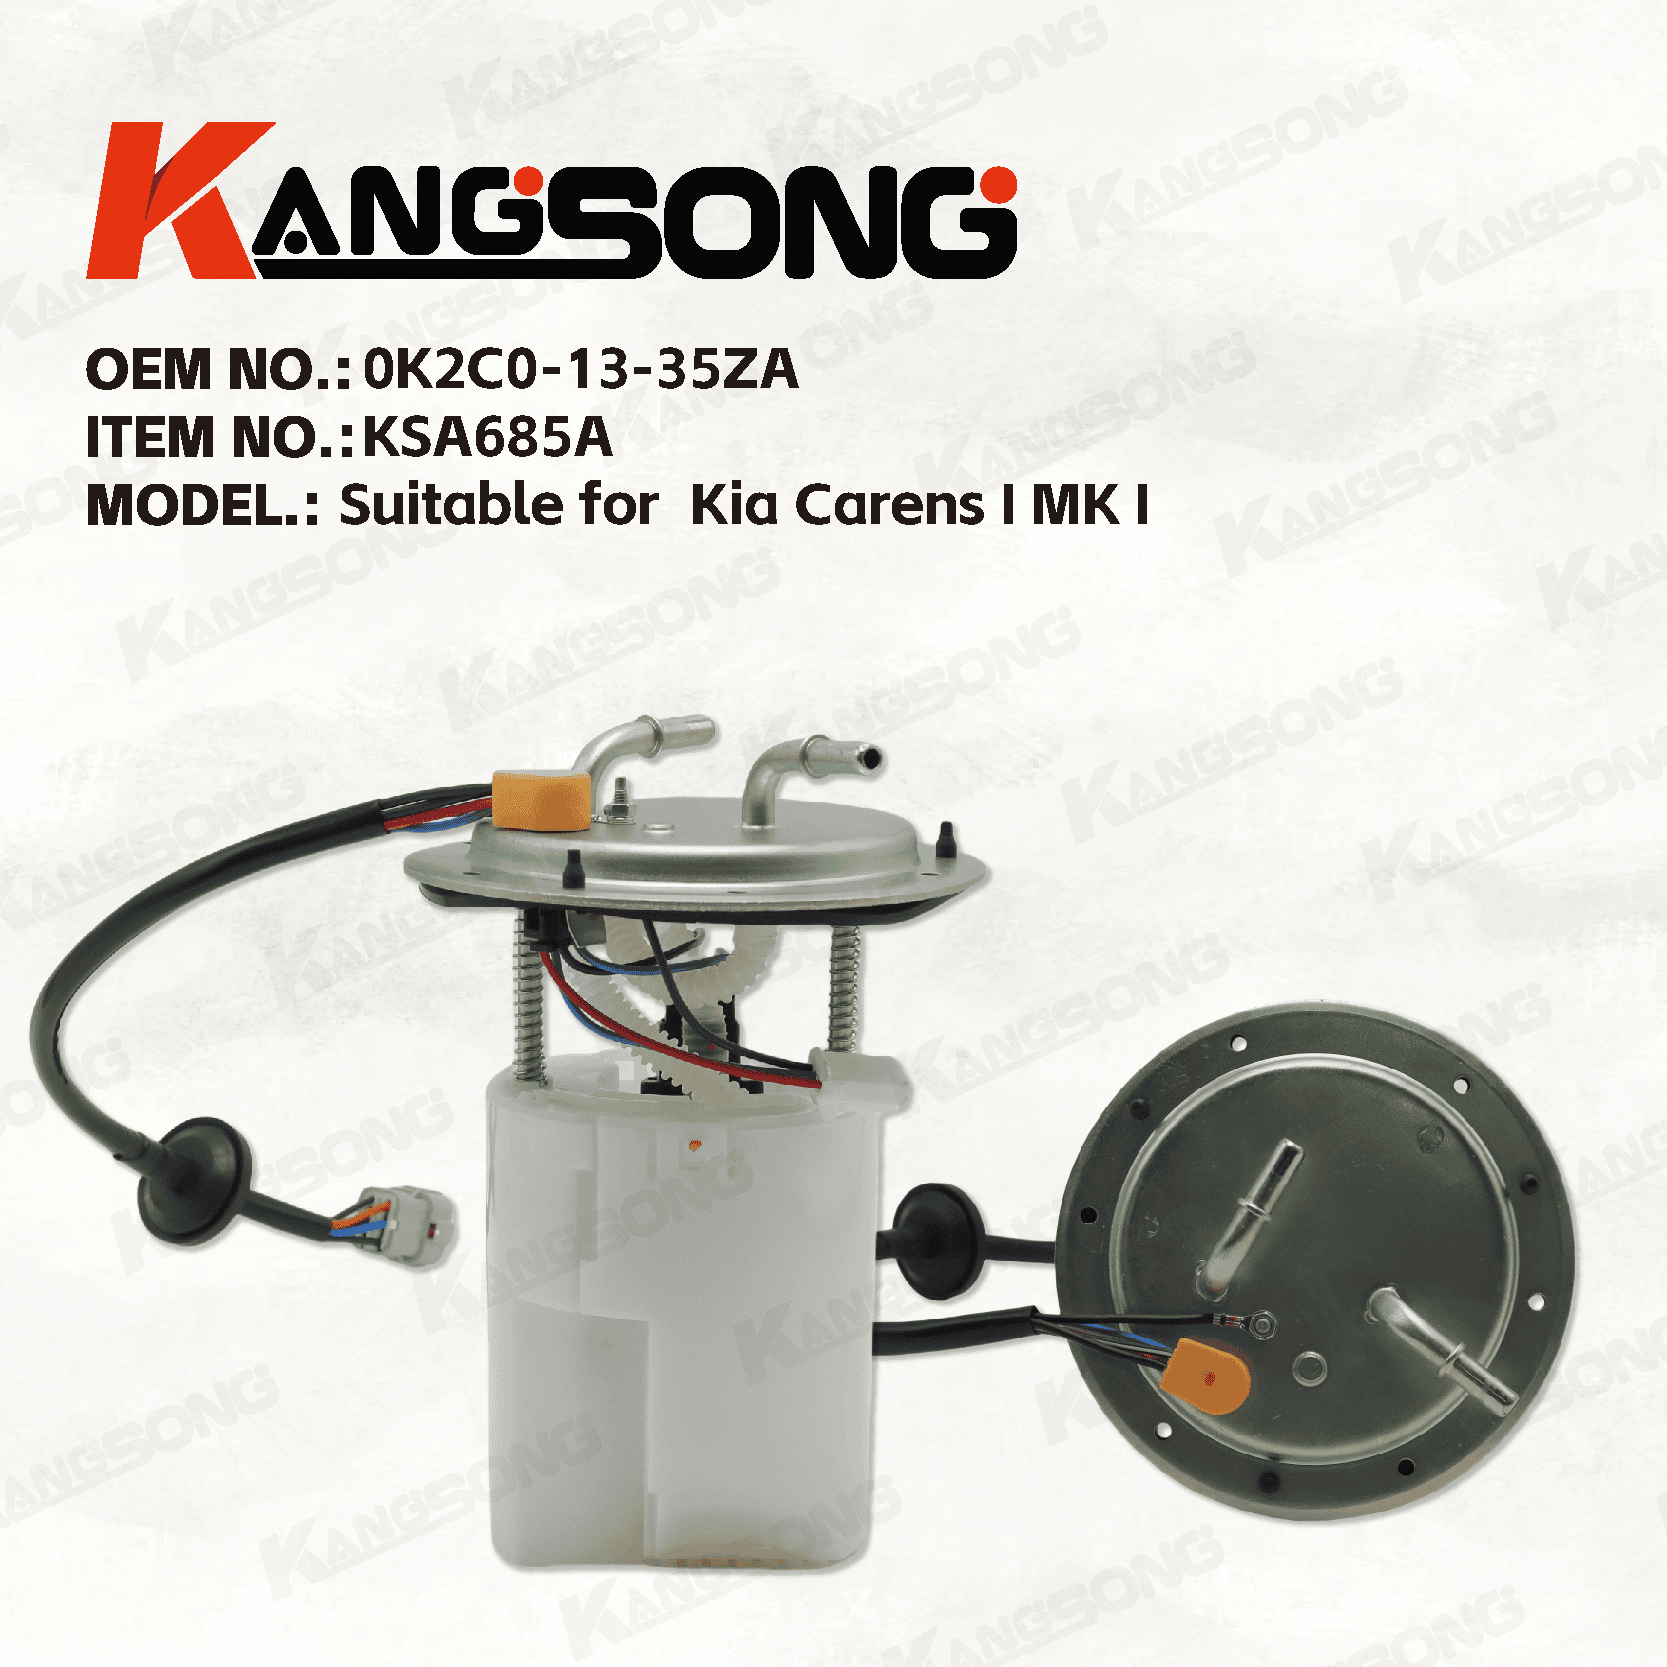 Applicable to Kia Carens I MK I/0K2C0-13-35ZA/Fuel Pump Assembly/ KS-A685A